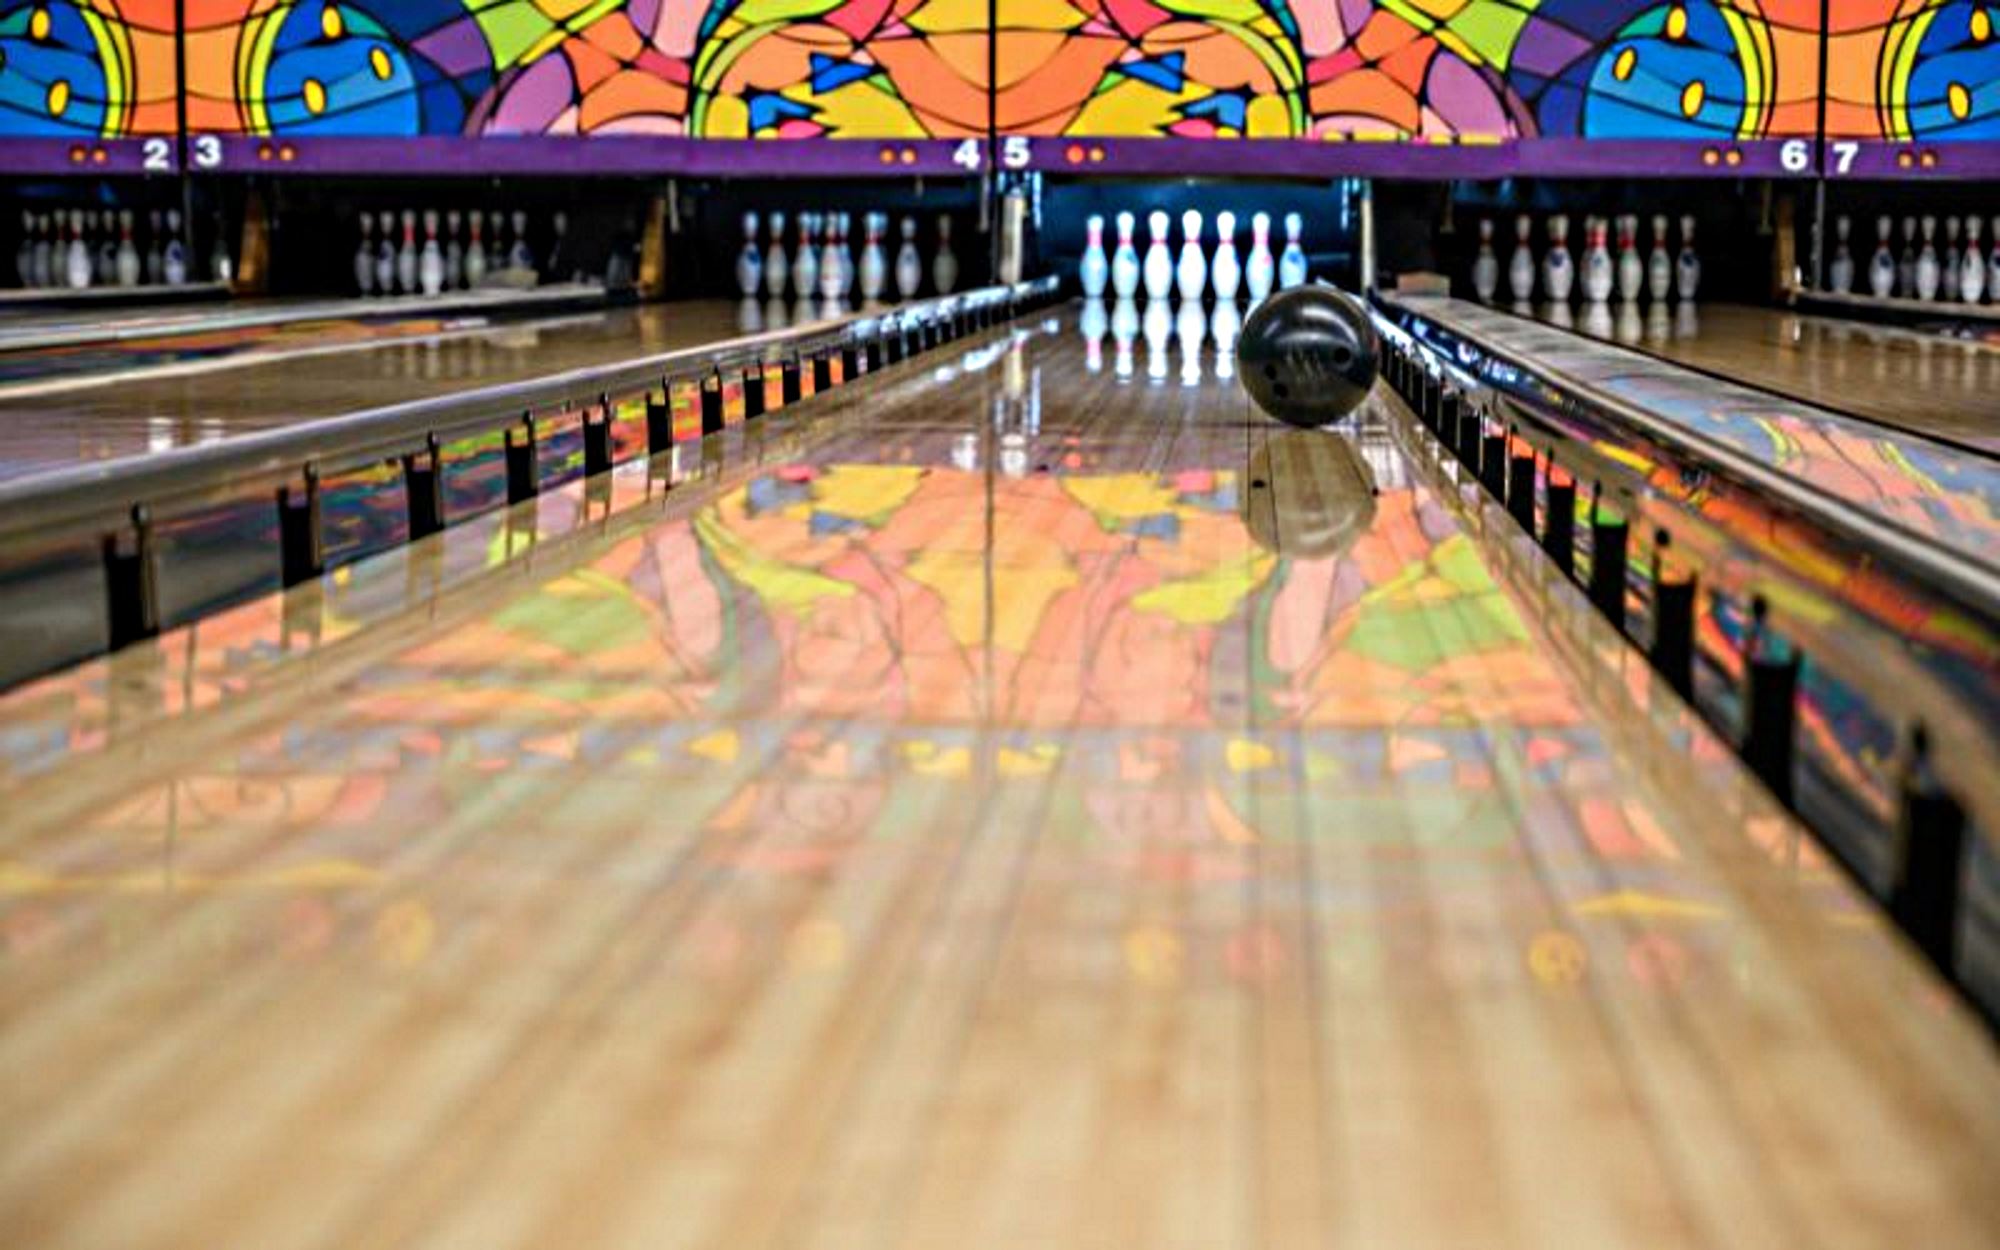 Bowling ball rolling down a bowling lane - sport of bowling.